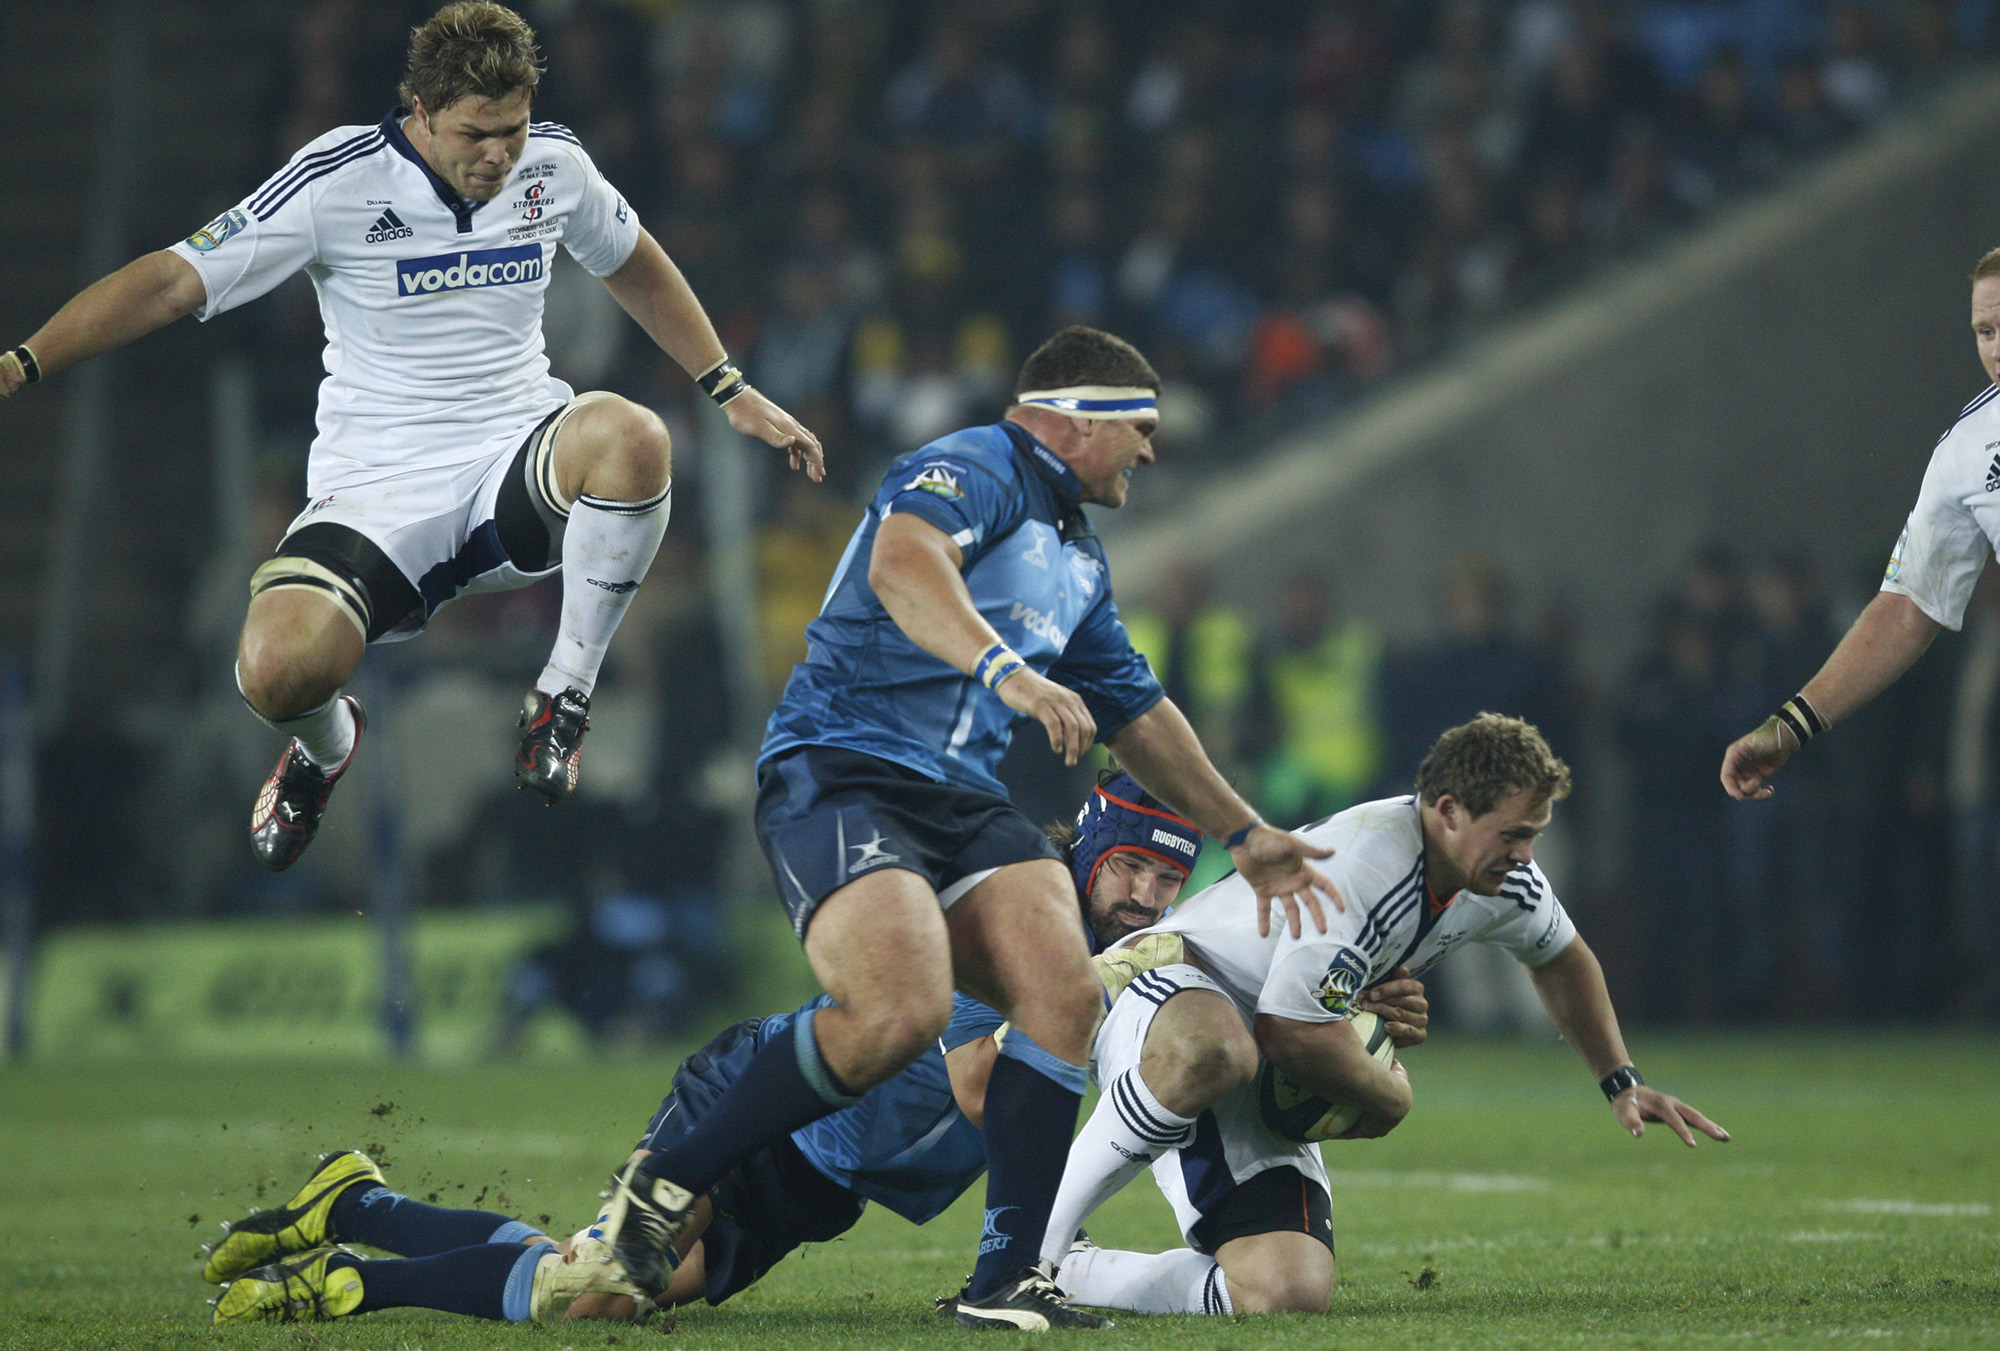 https://www.dailymaverick.co.za/wp-content/uploads/Craig-soweto-rugby-inset-4.jpg